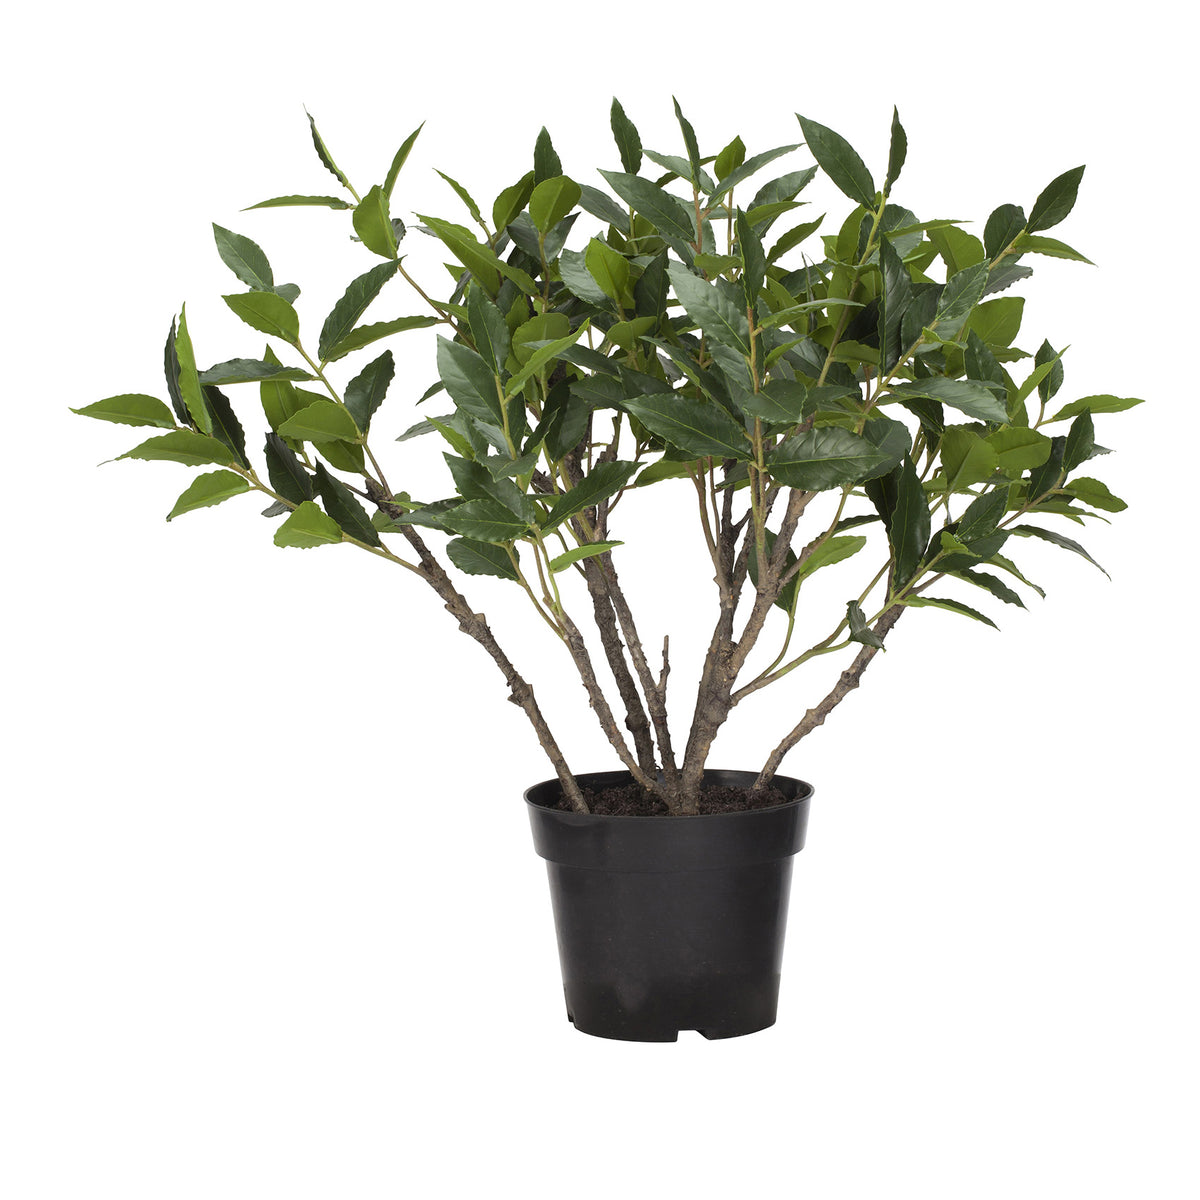 Kunstig busk medium 53 cm høj kunstig plante